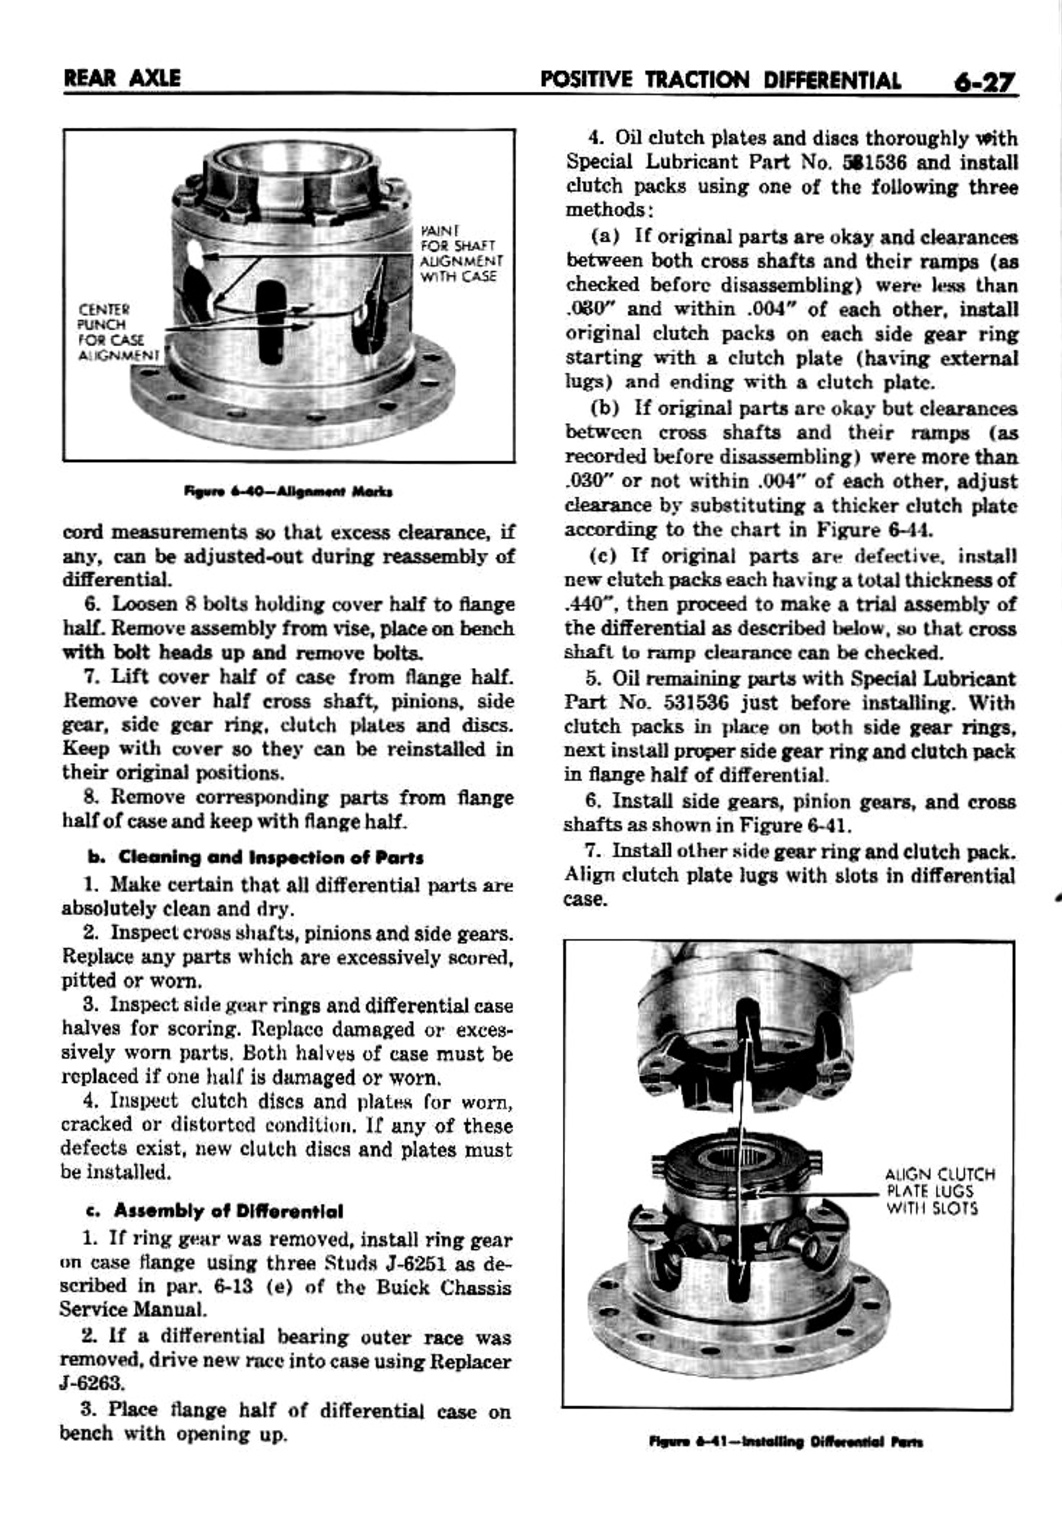 n_07 1959 Buick Shop Manual - Rear Axle-027-027.jpg